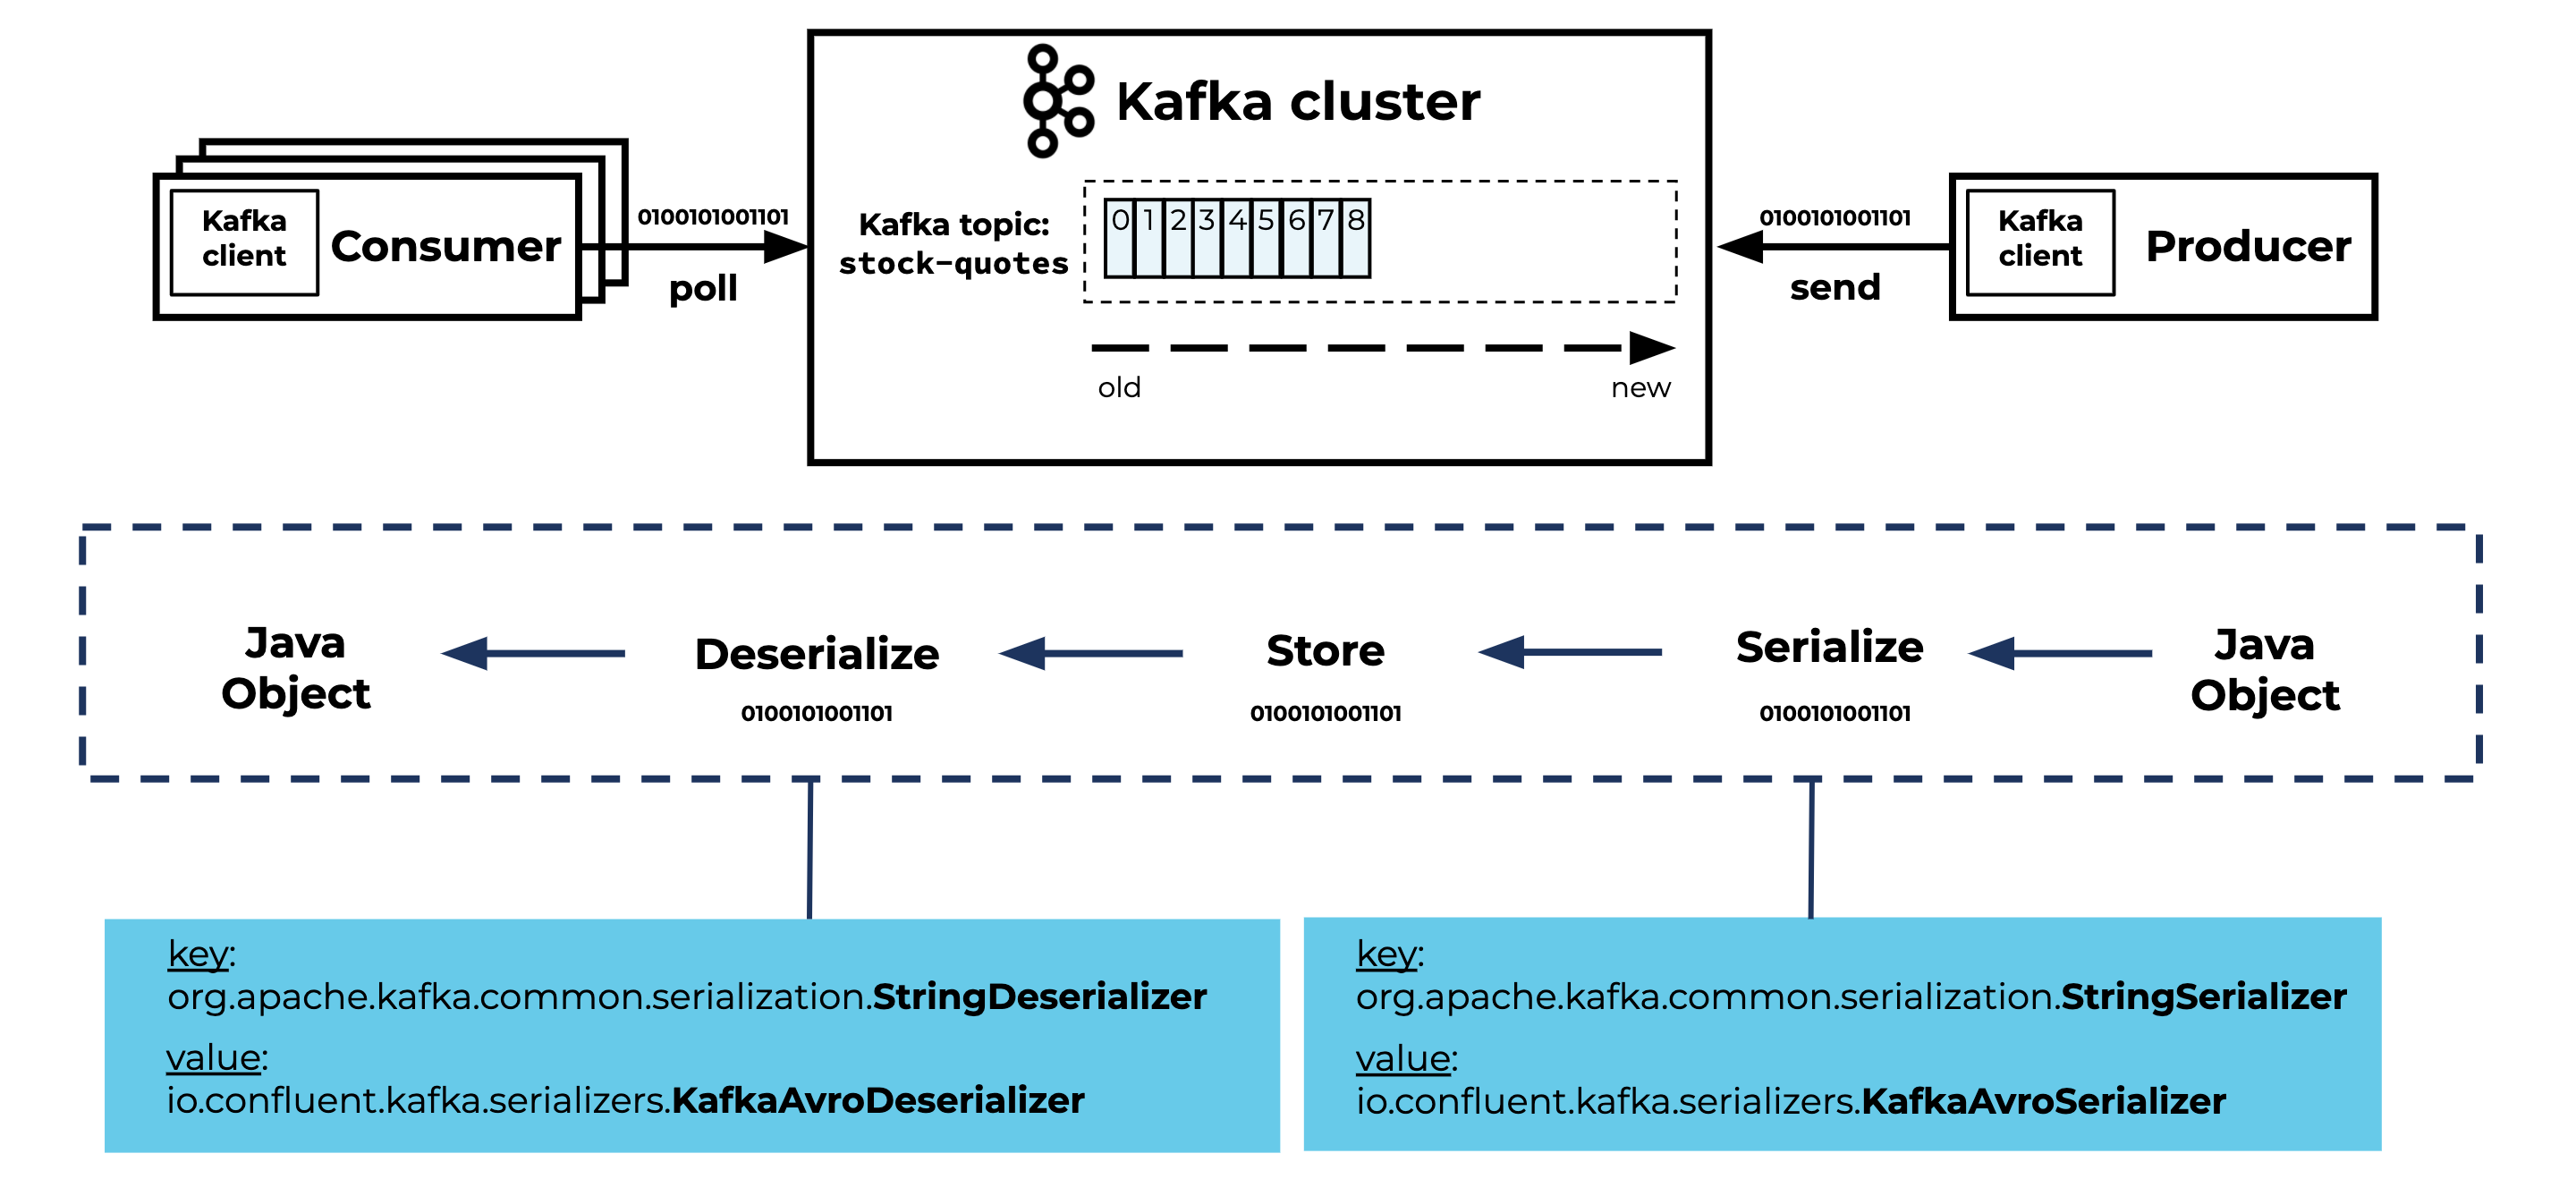 Java Object ➝ Serialize ➝ Store ➝ Deserialize ➝ Java Object